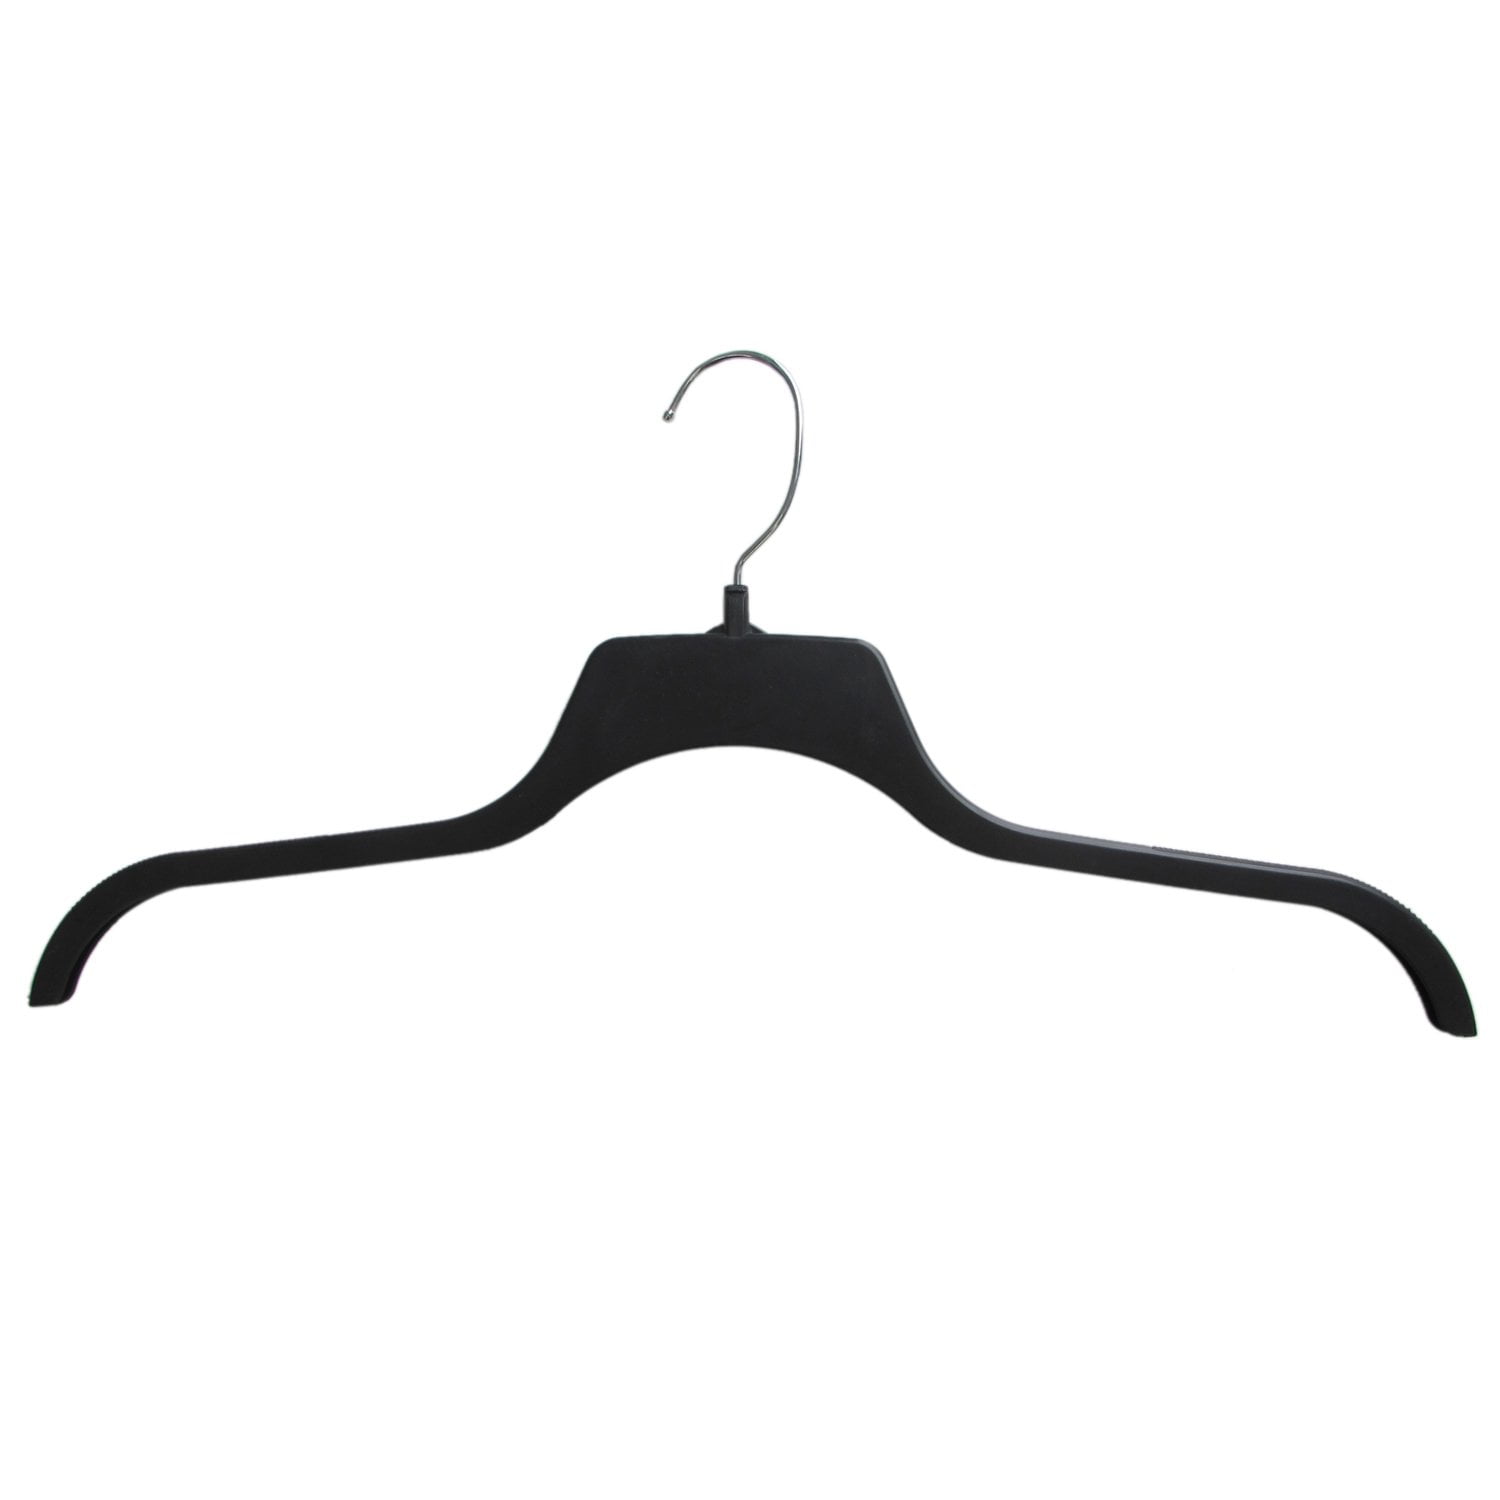 Black Plastic Open Hook Hanger- 100 Pack by Magnuson Group, MG-17PH, 54038